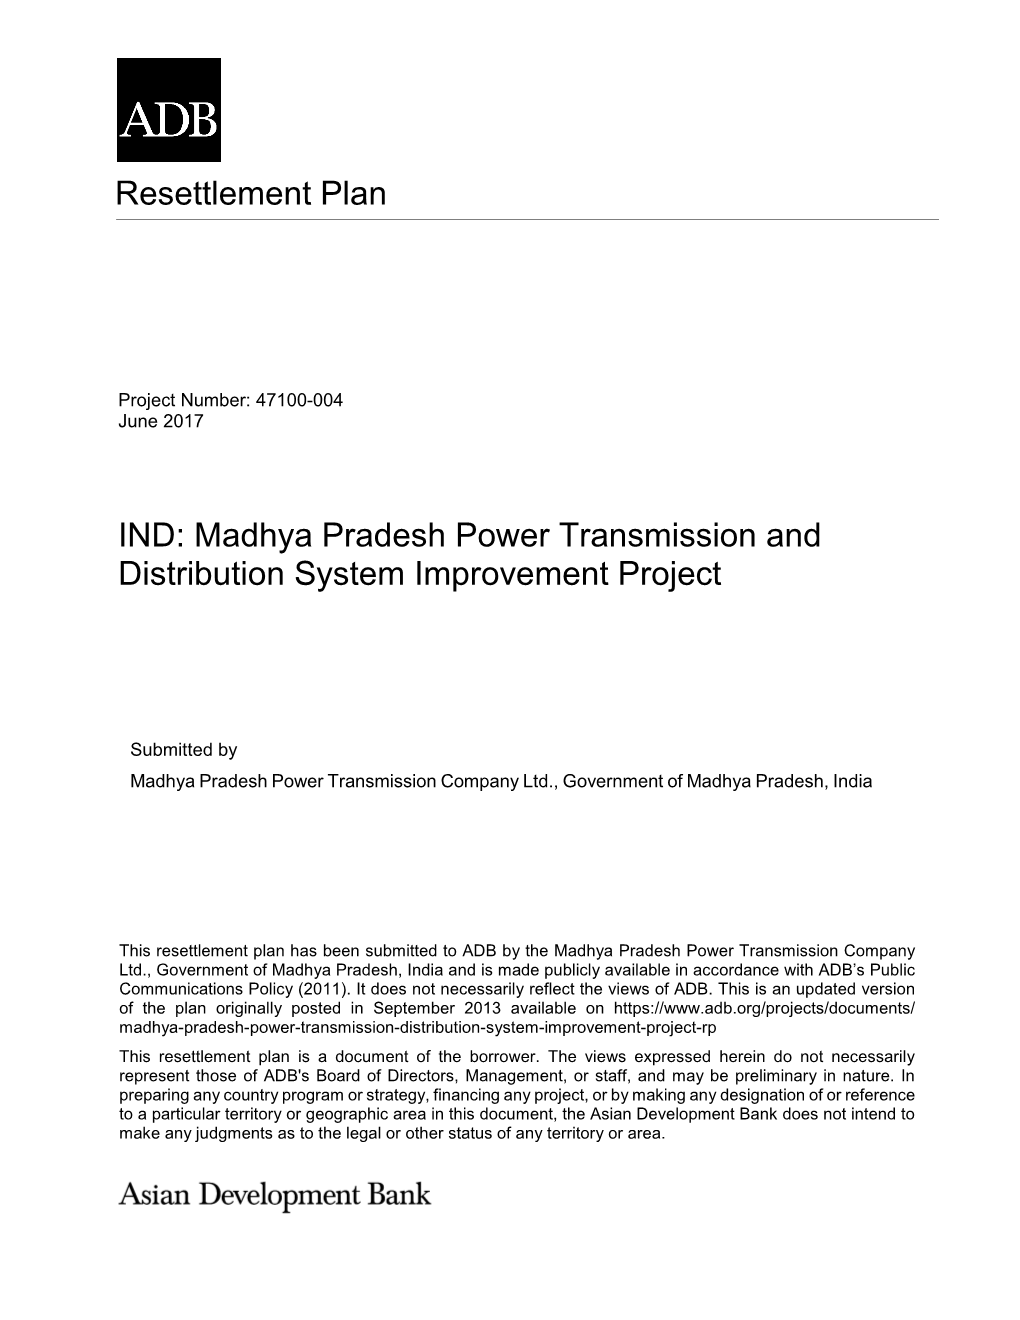 Resettlement Plan IND: Madhya Pradesh Power Transmission And